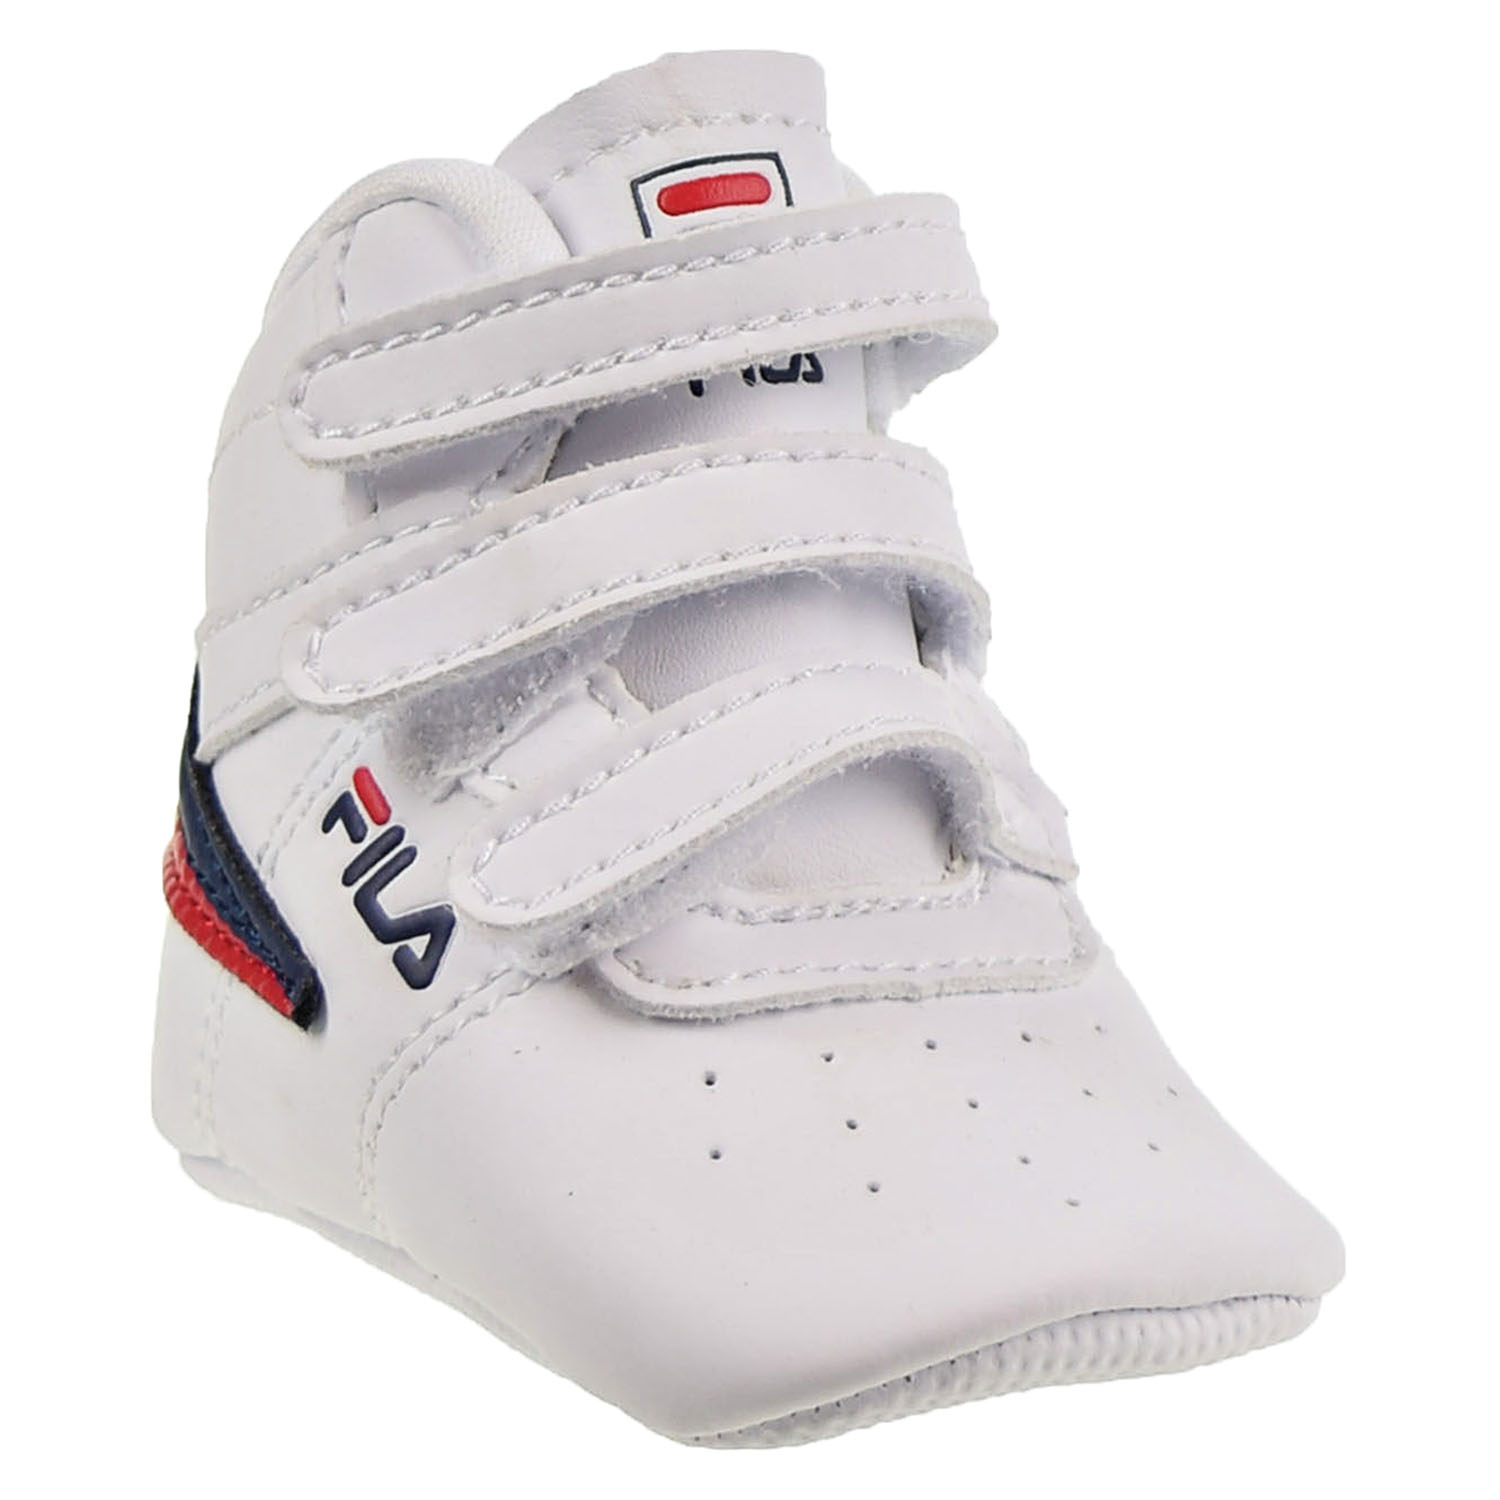 Fila Crib F-13 Kids' Shoes White/Navy/Red 7fm00613-125 - image 2 of 6